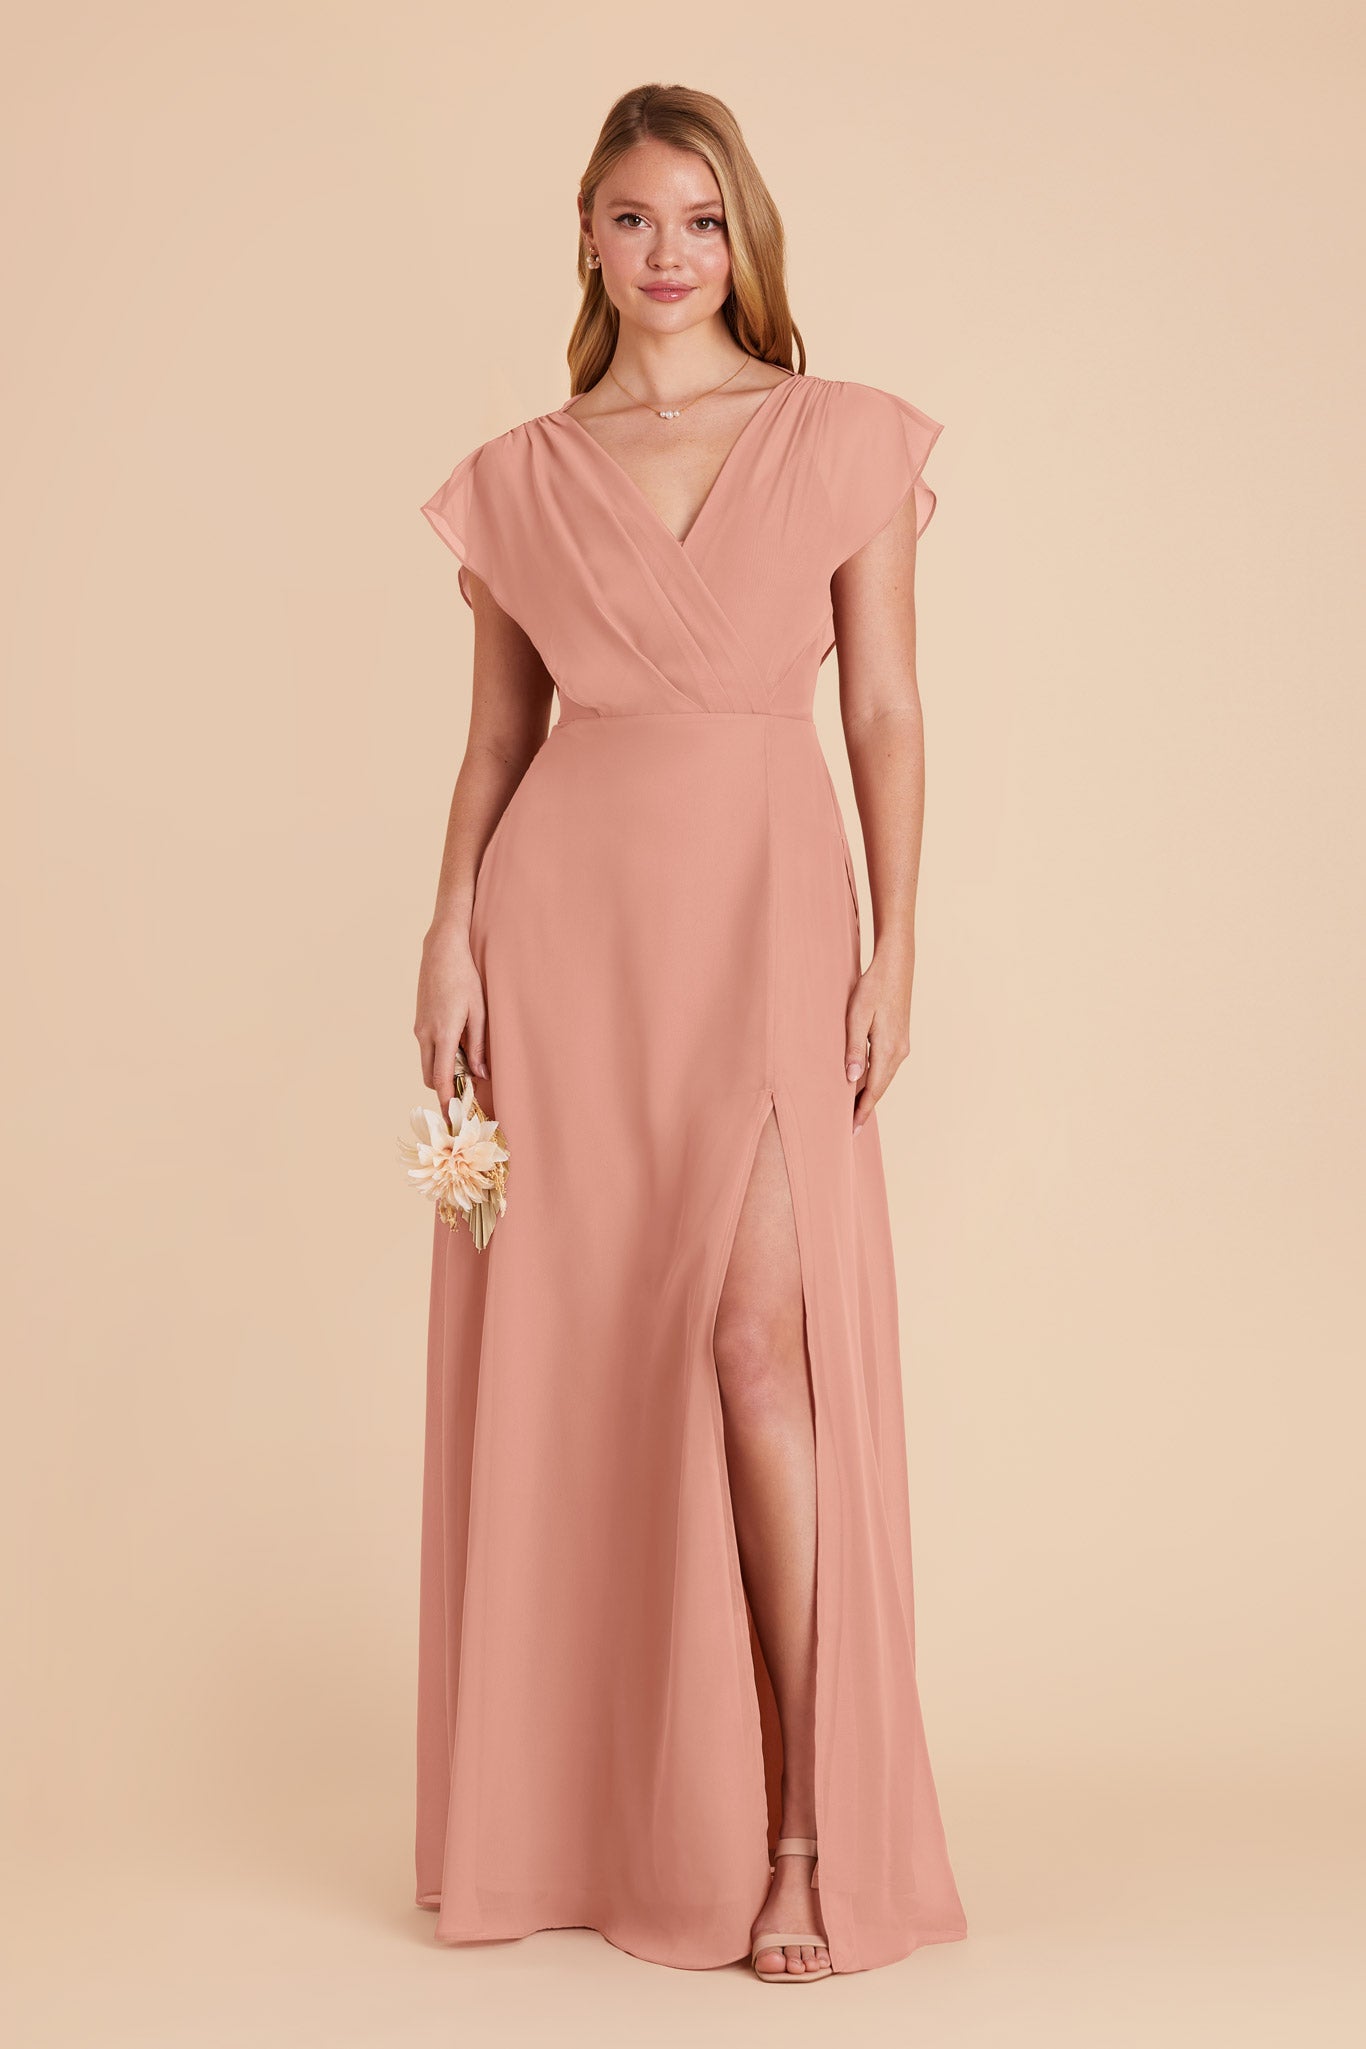 Sparkly Dusty Rose Tulle Beaded Prom Dress Backless V Neck S1 –  BallGownBridal